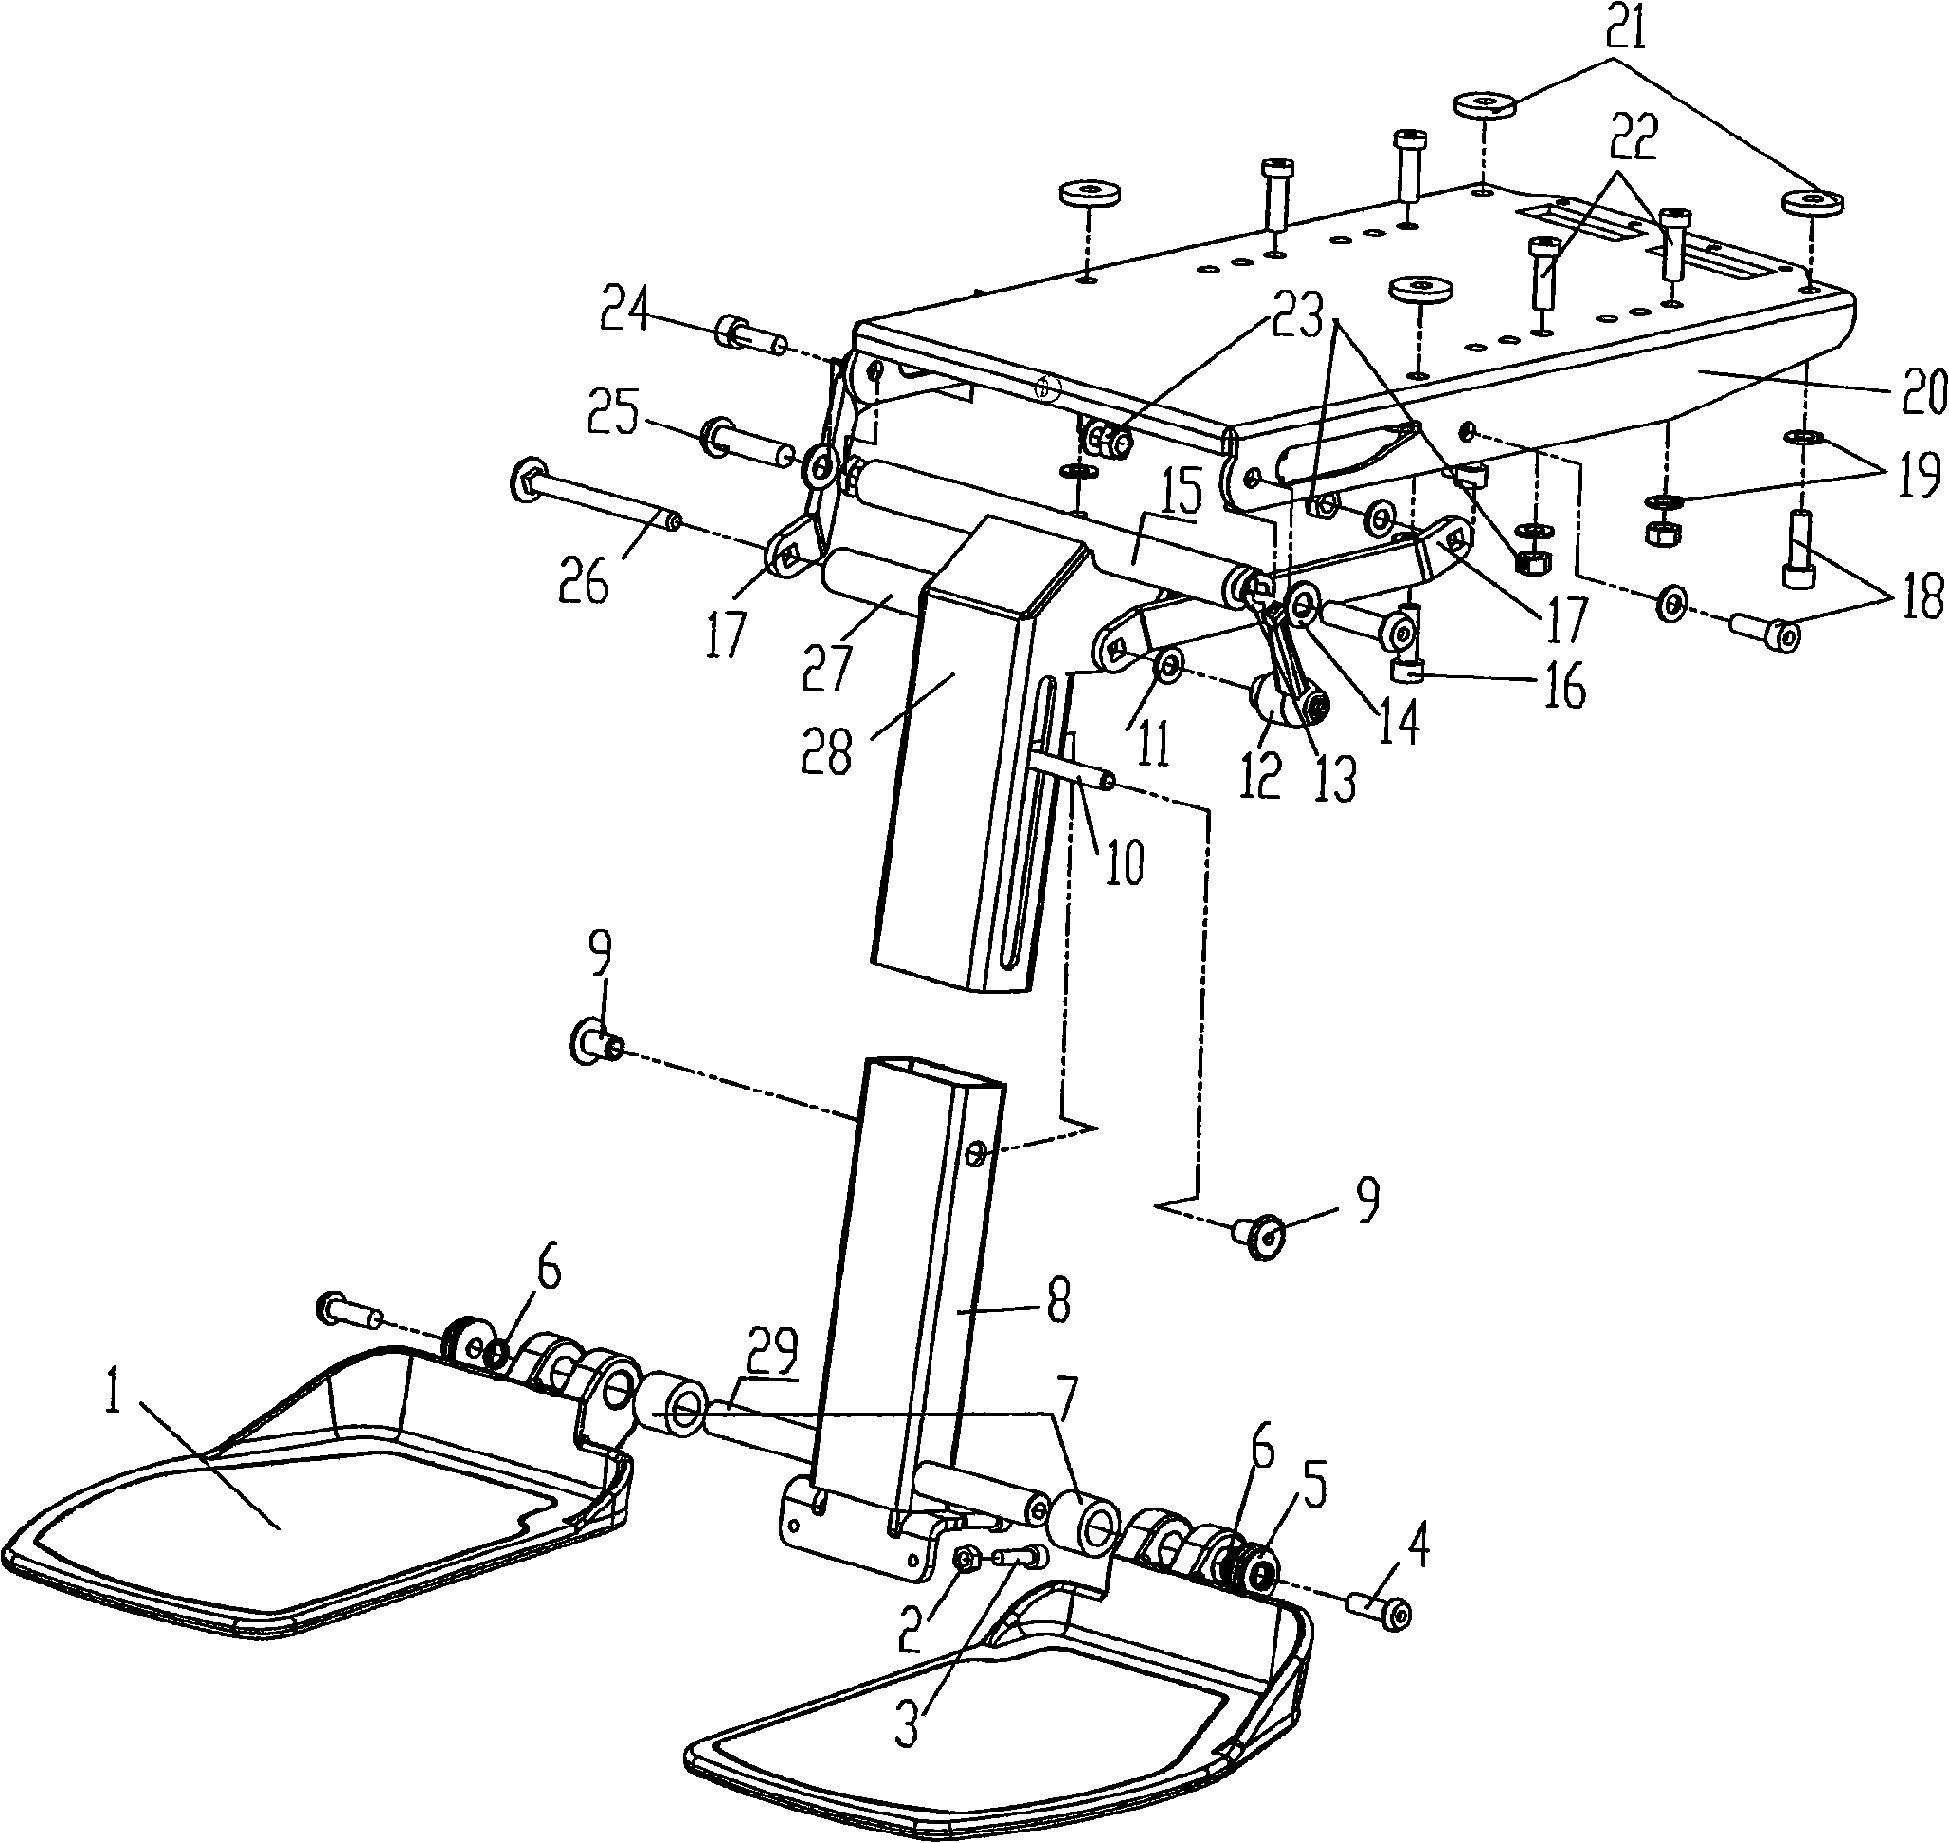 Multifunctional electric wheelchair pedal adjusting apparatus